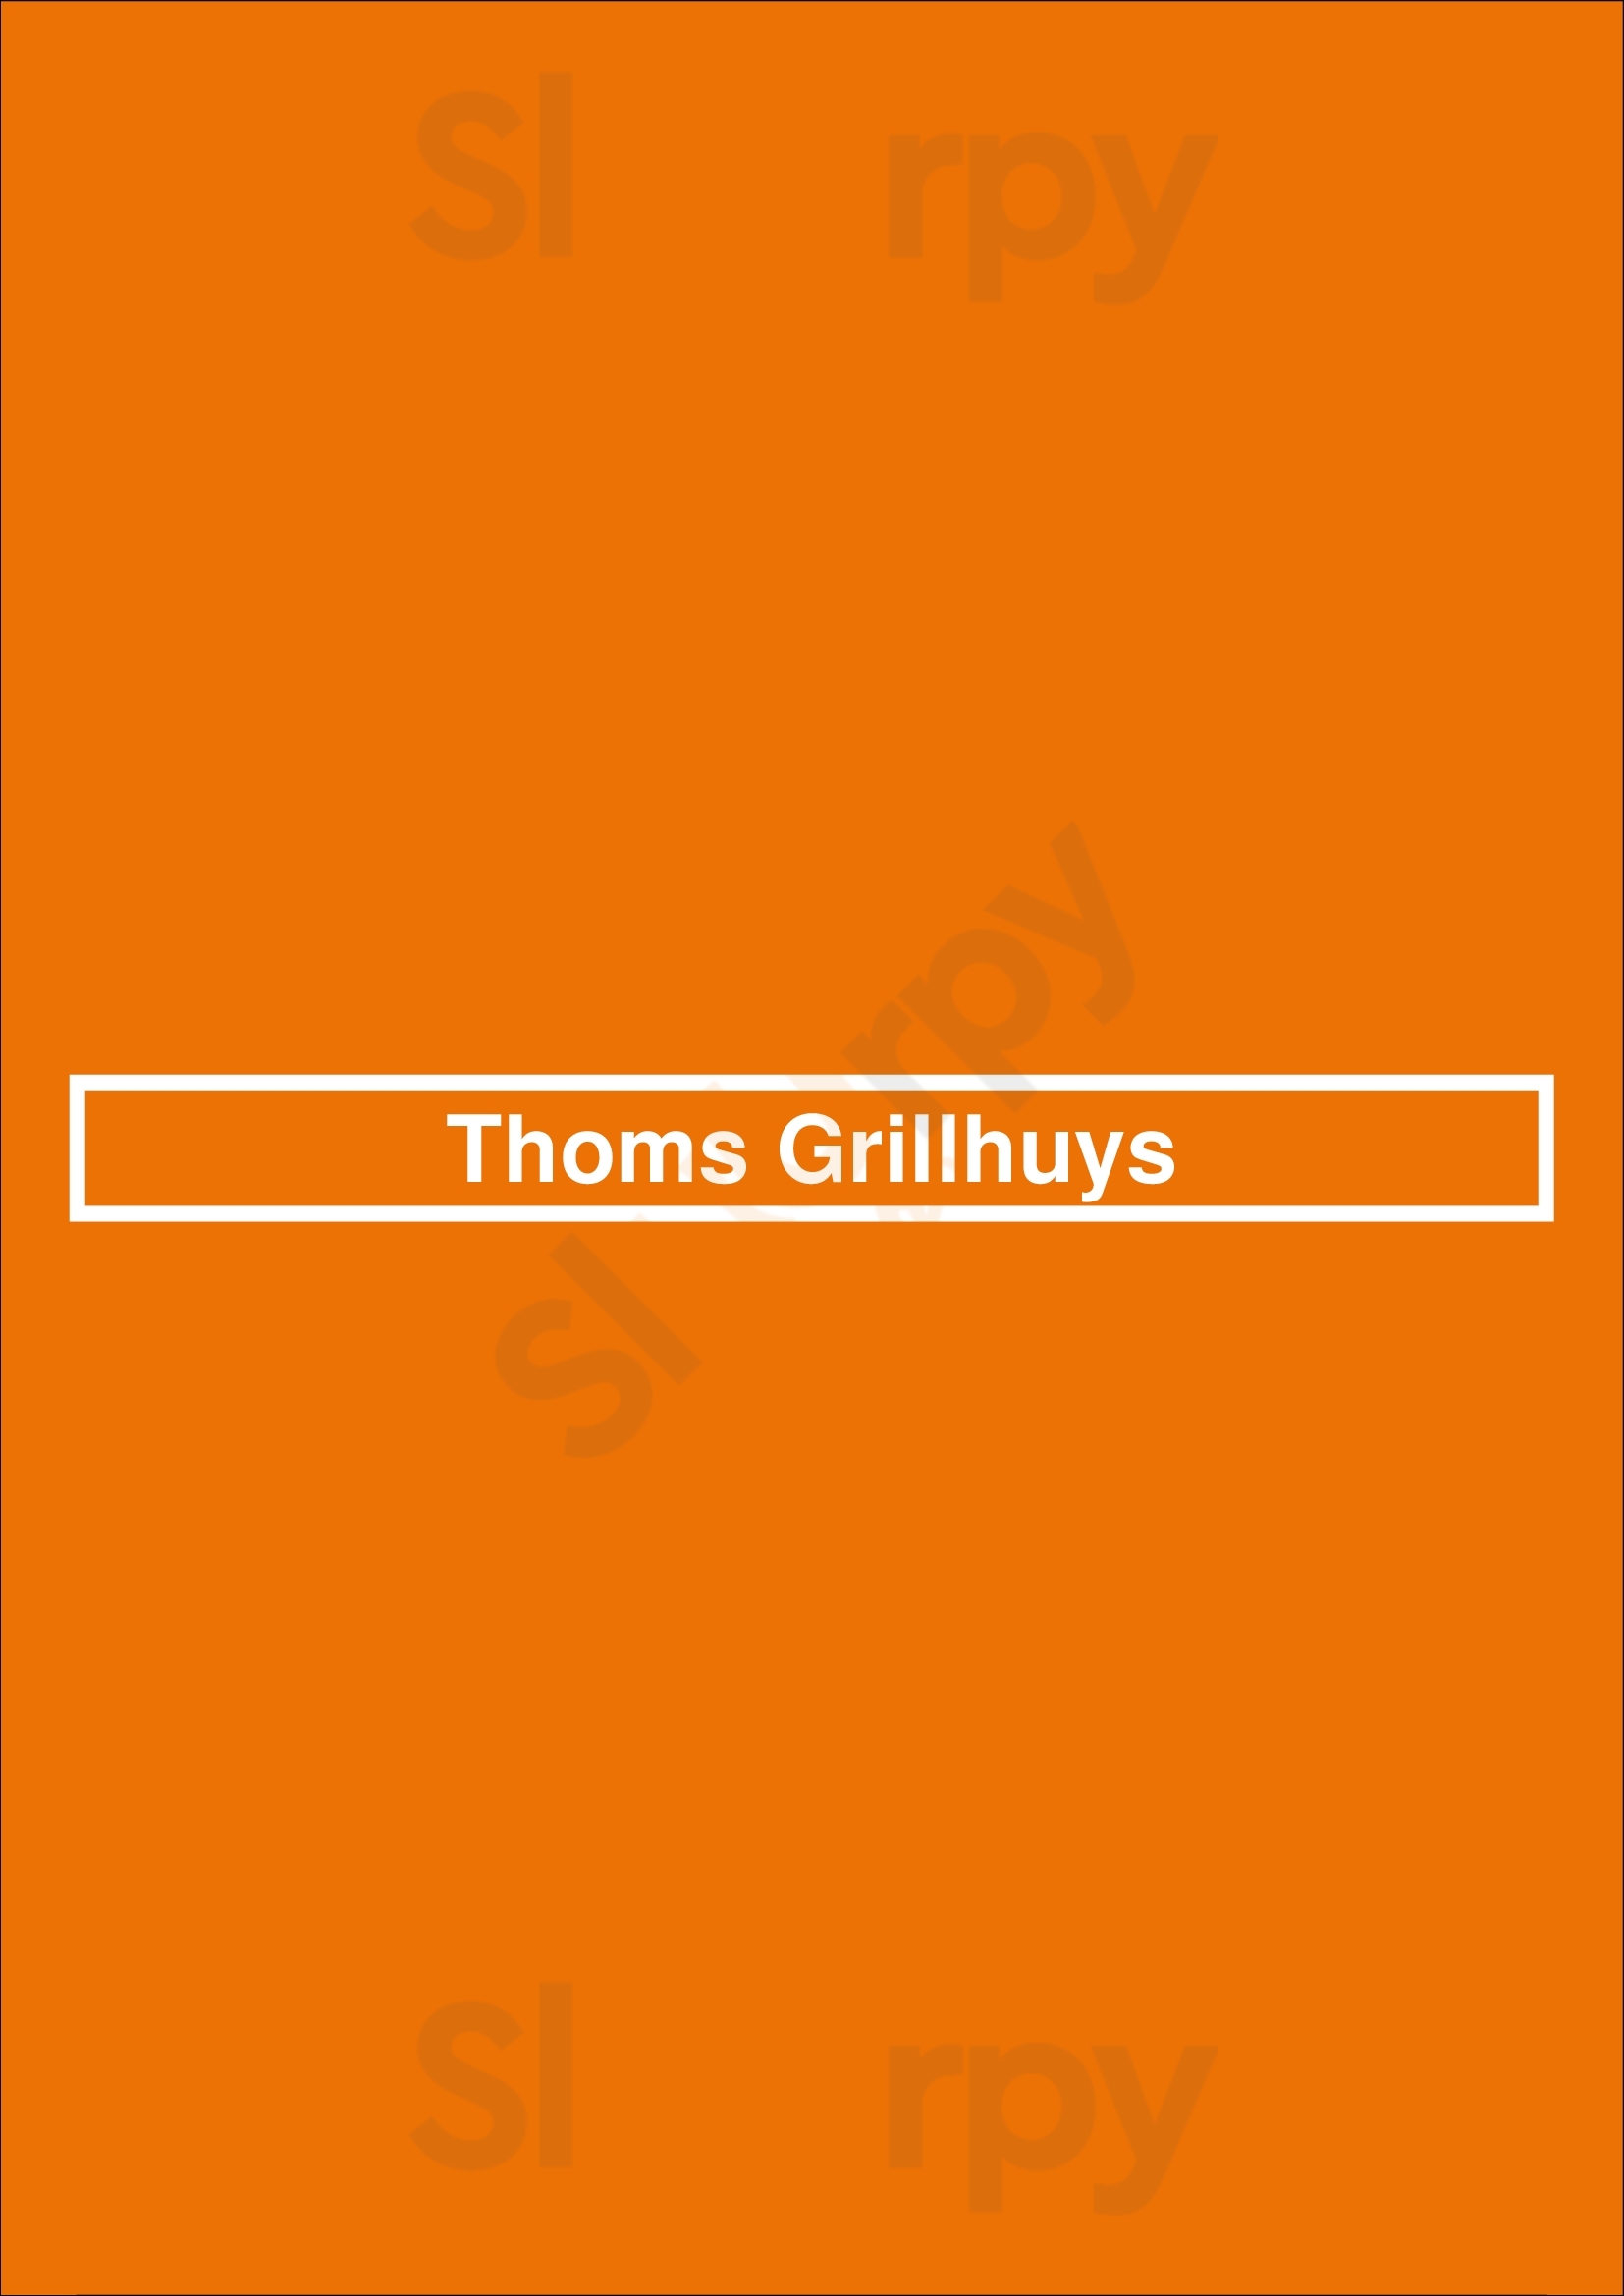 Thoms Grillhuys Kampen Menu - 1